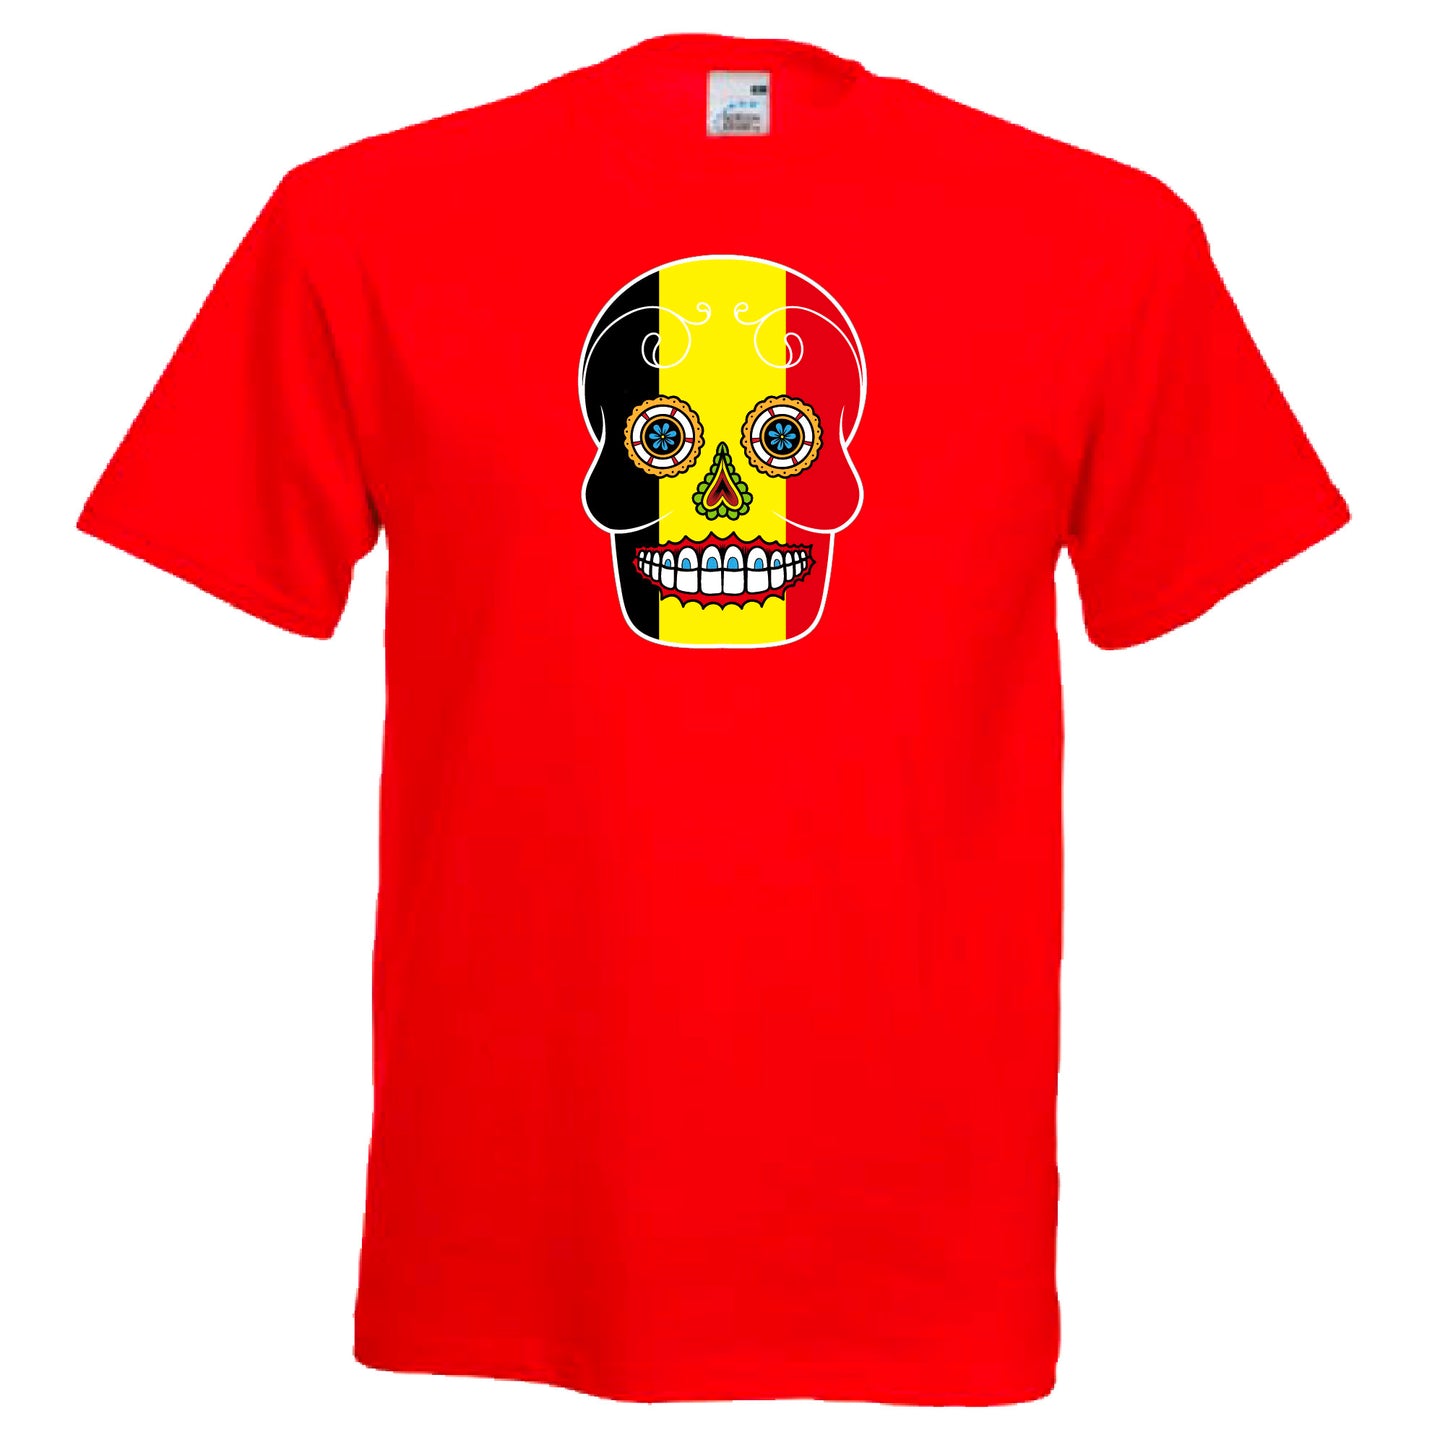 INDIGOS UG - T-Shirt Herren - Belgien - Skull - Fussball